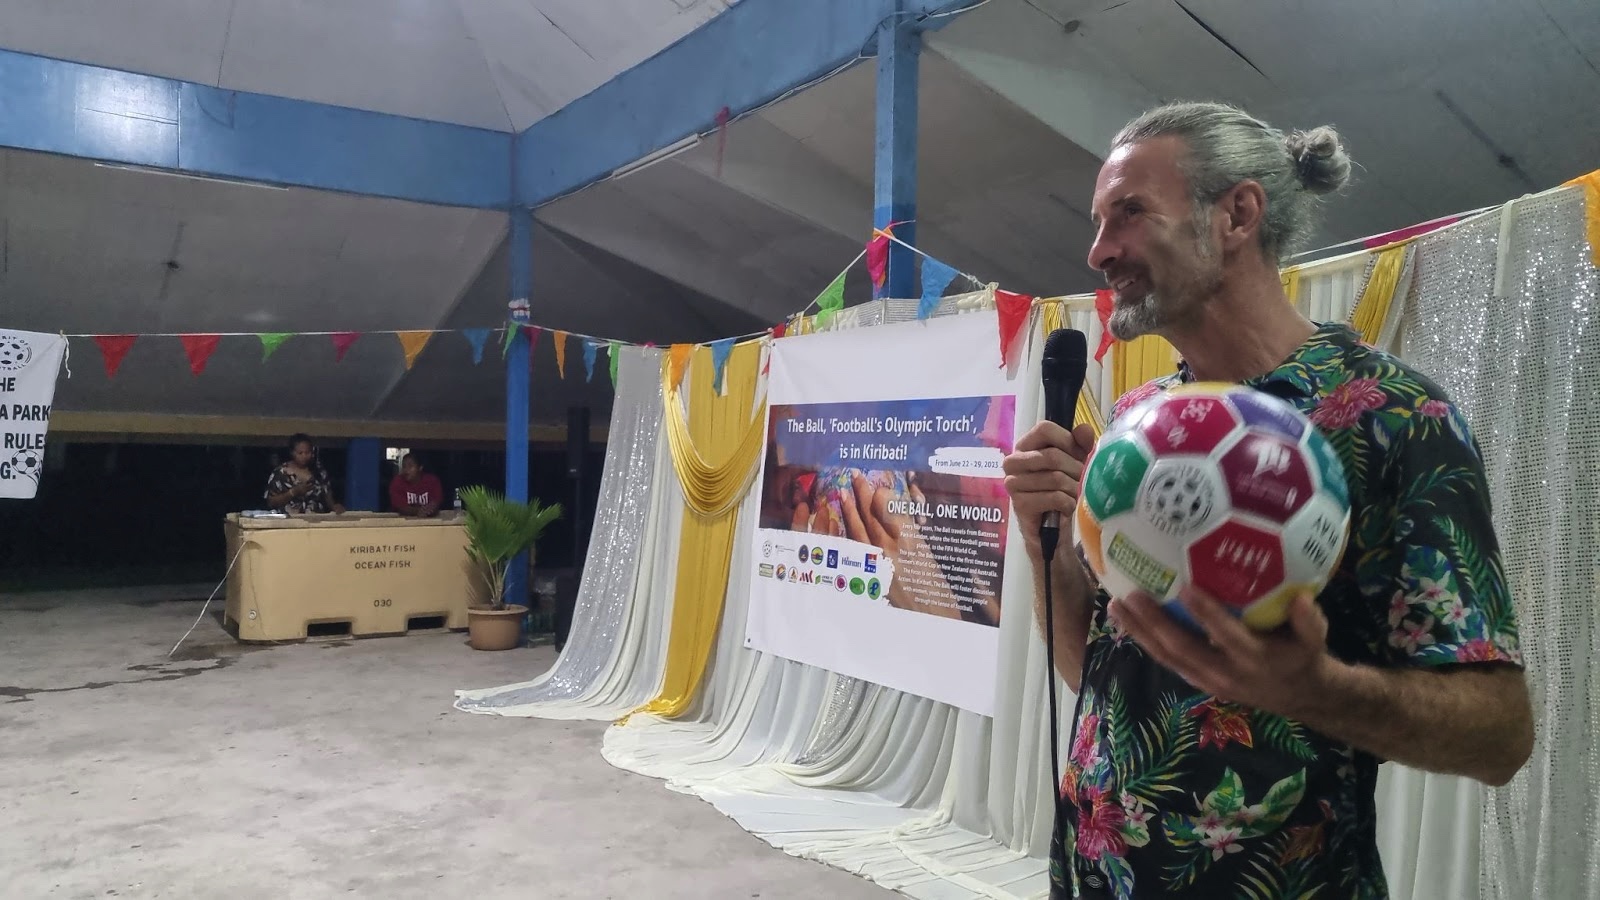 Andrew presents the Ball Kiribati